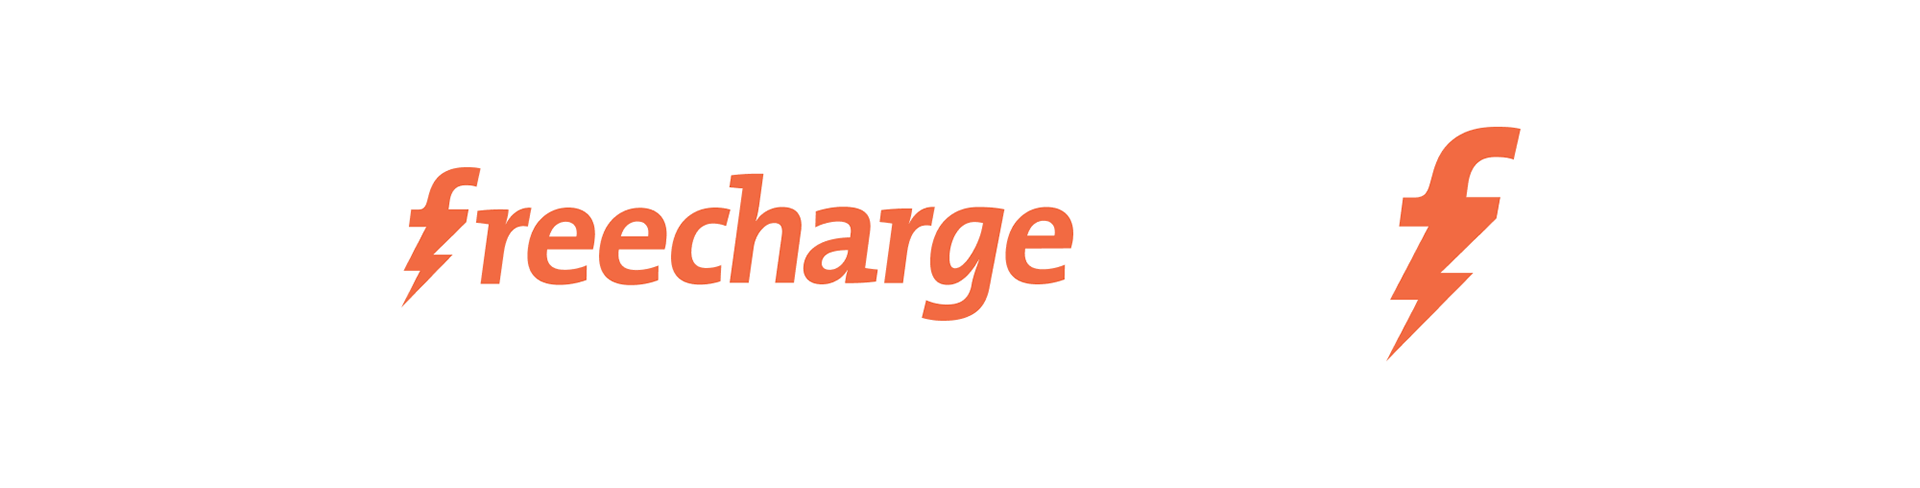 Aditya Dipankar Freecharge Revamp Of A Young Recharge Brand